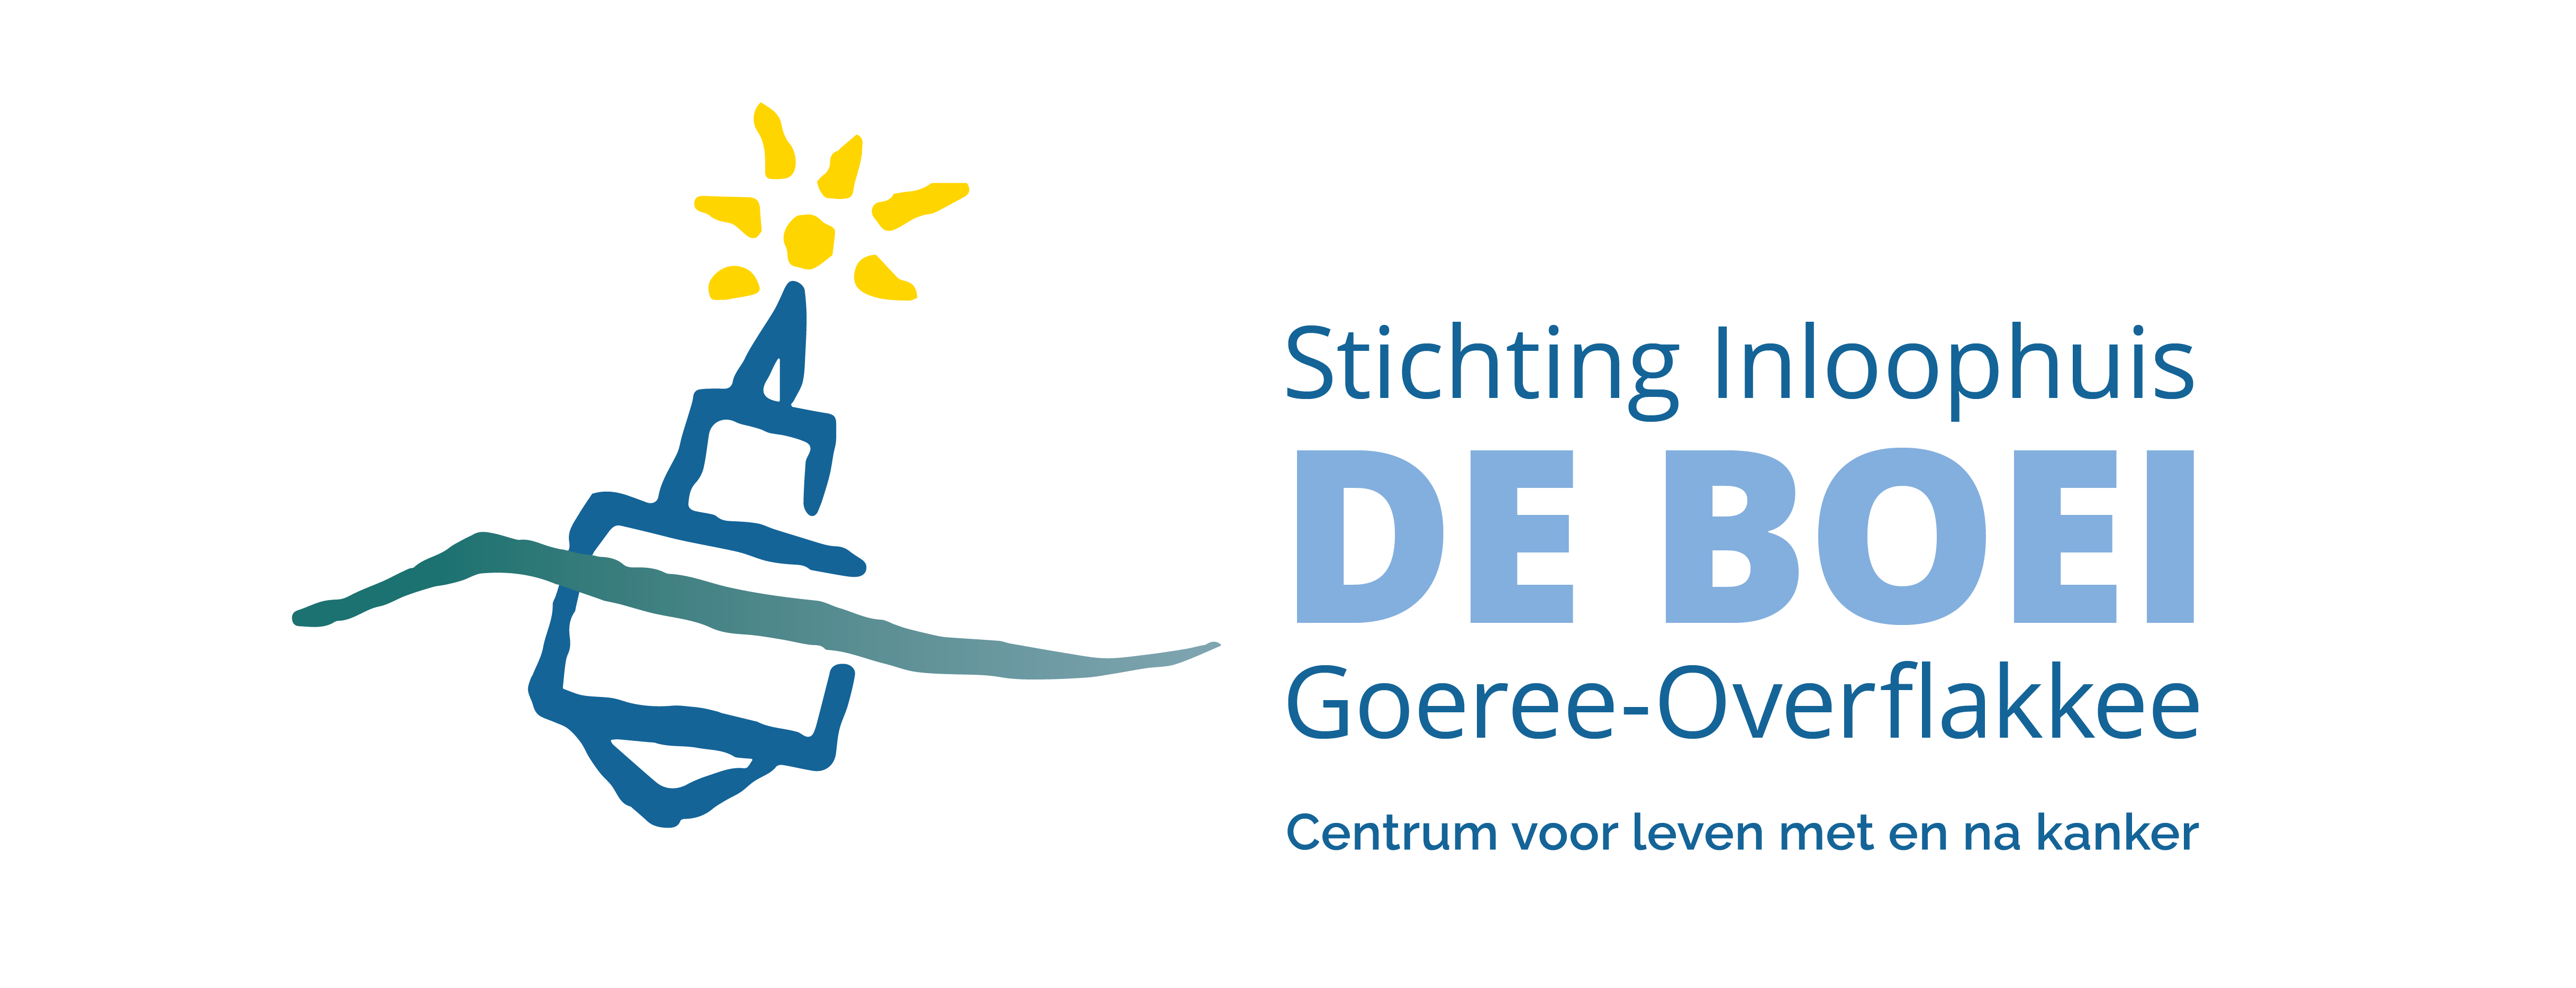 Stichting Inloophuis "De Boei"